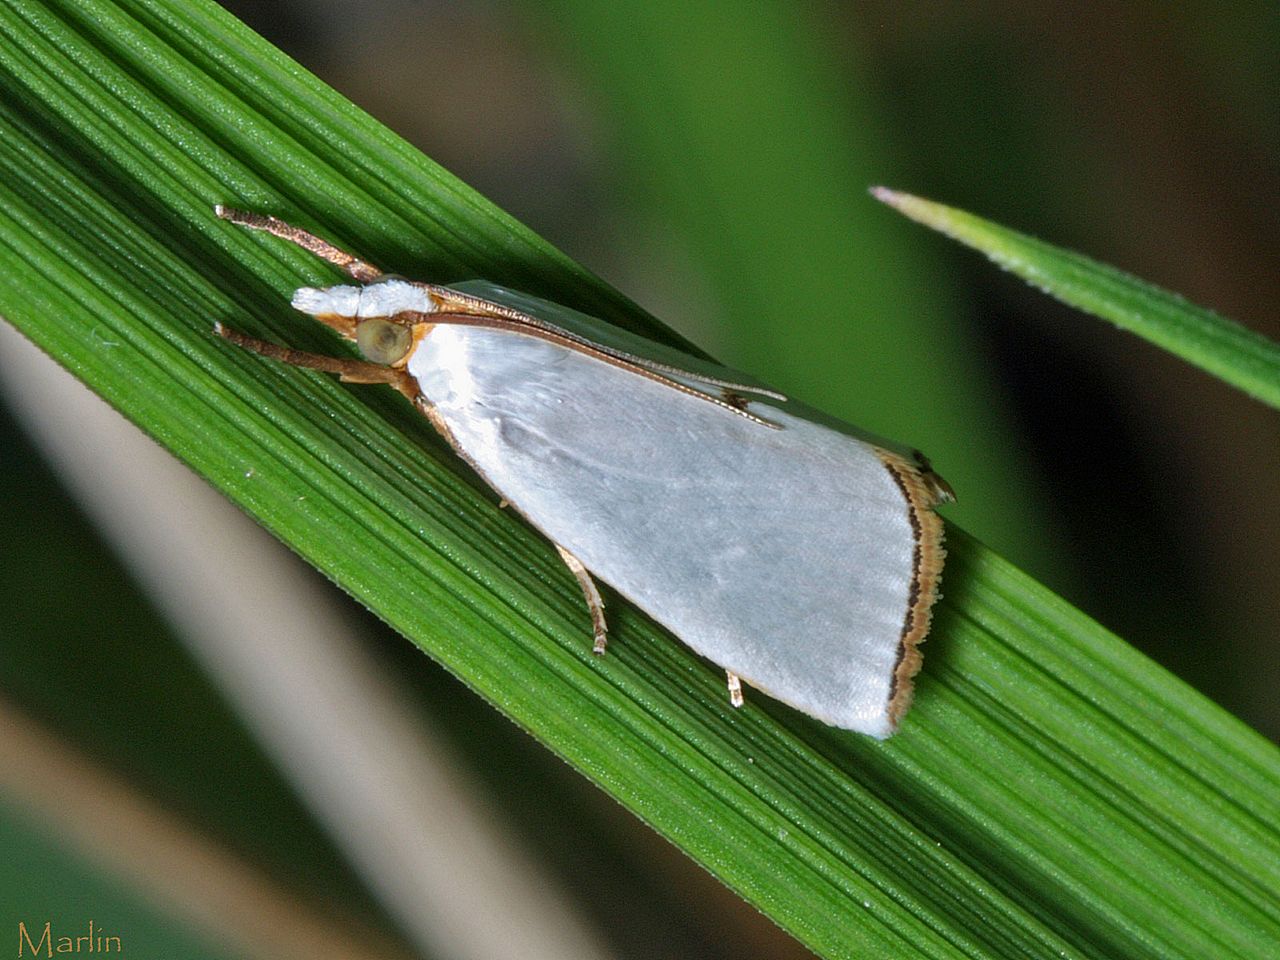 Snowy Urola Moth - Urola nivalis